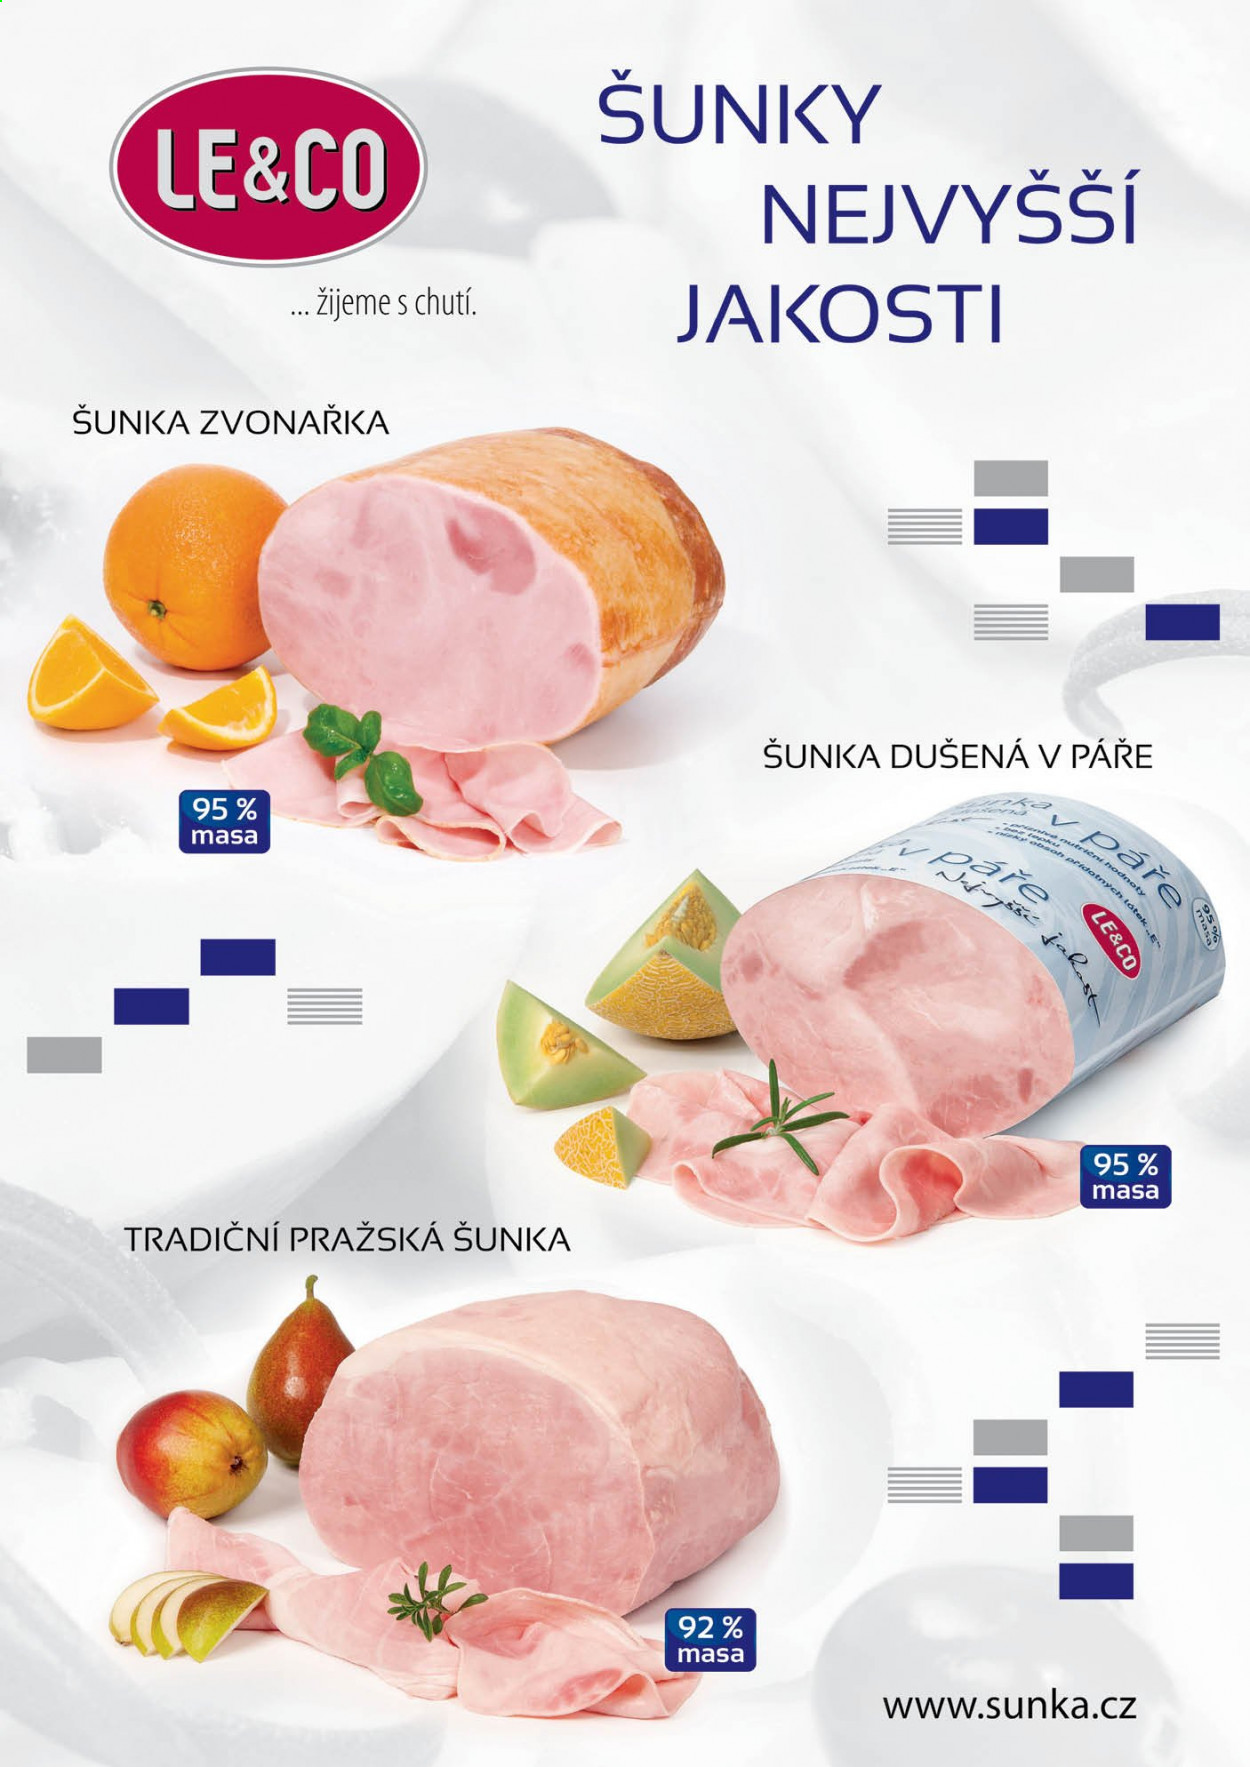 Leták Tamda Foods - 9. 6. 2021 - 15. 6. 2021. 